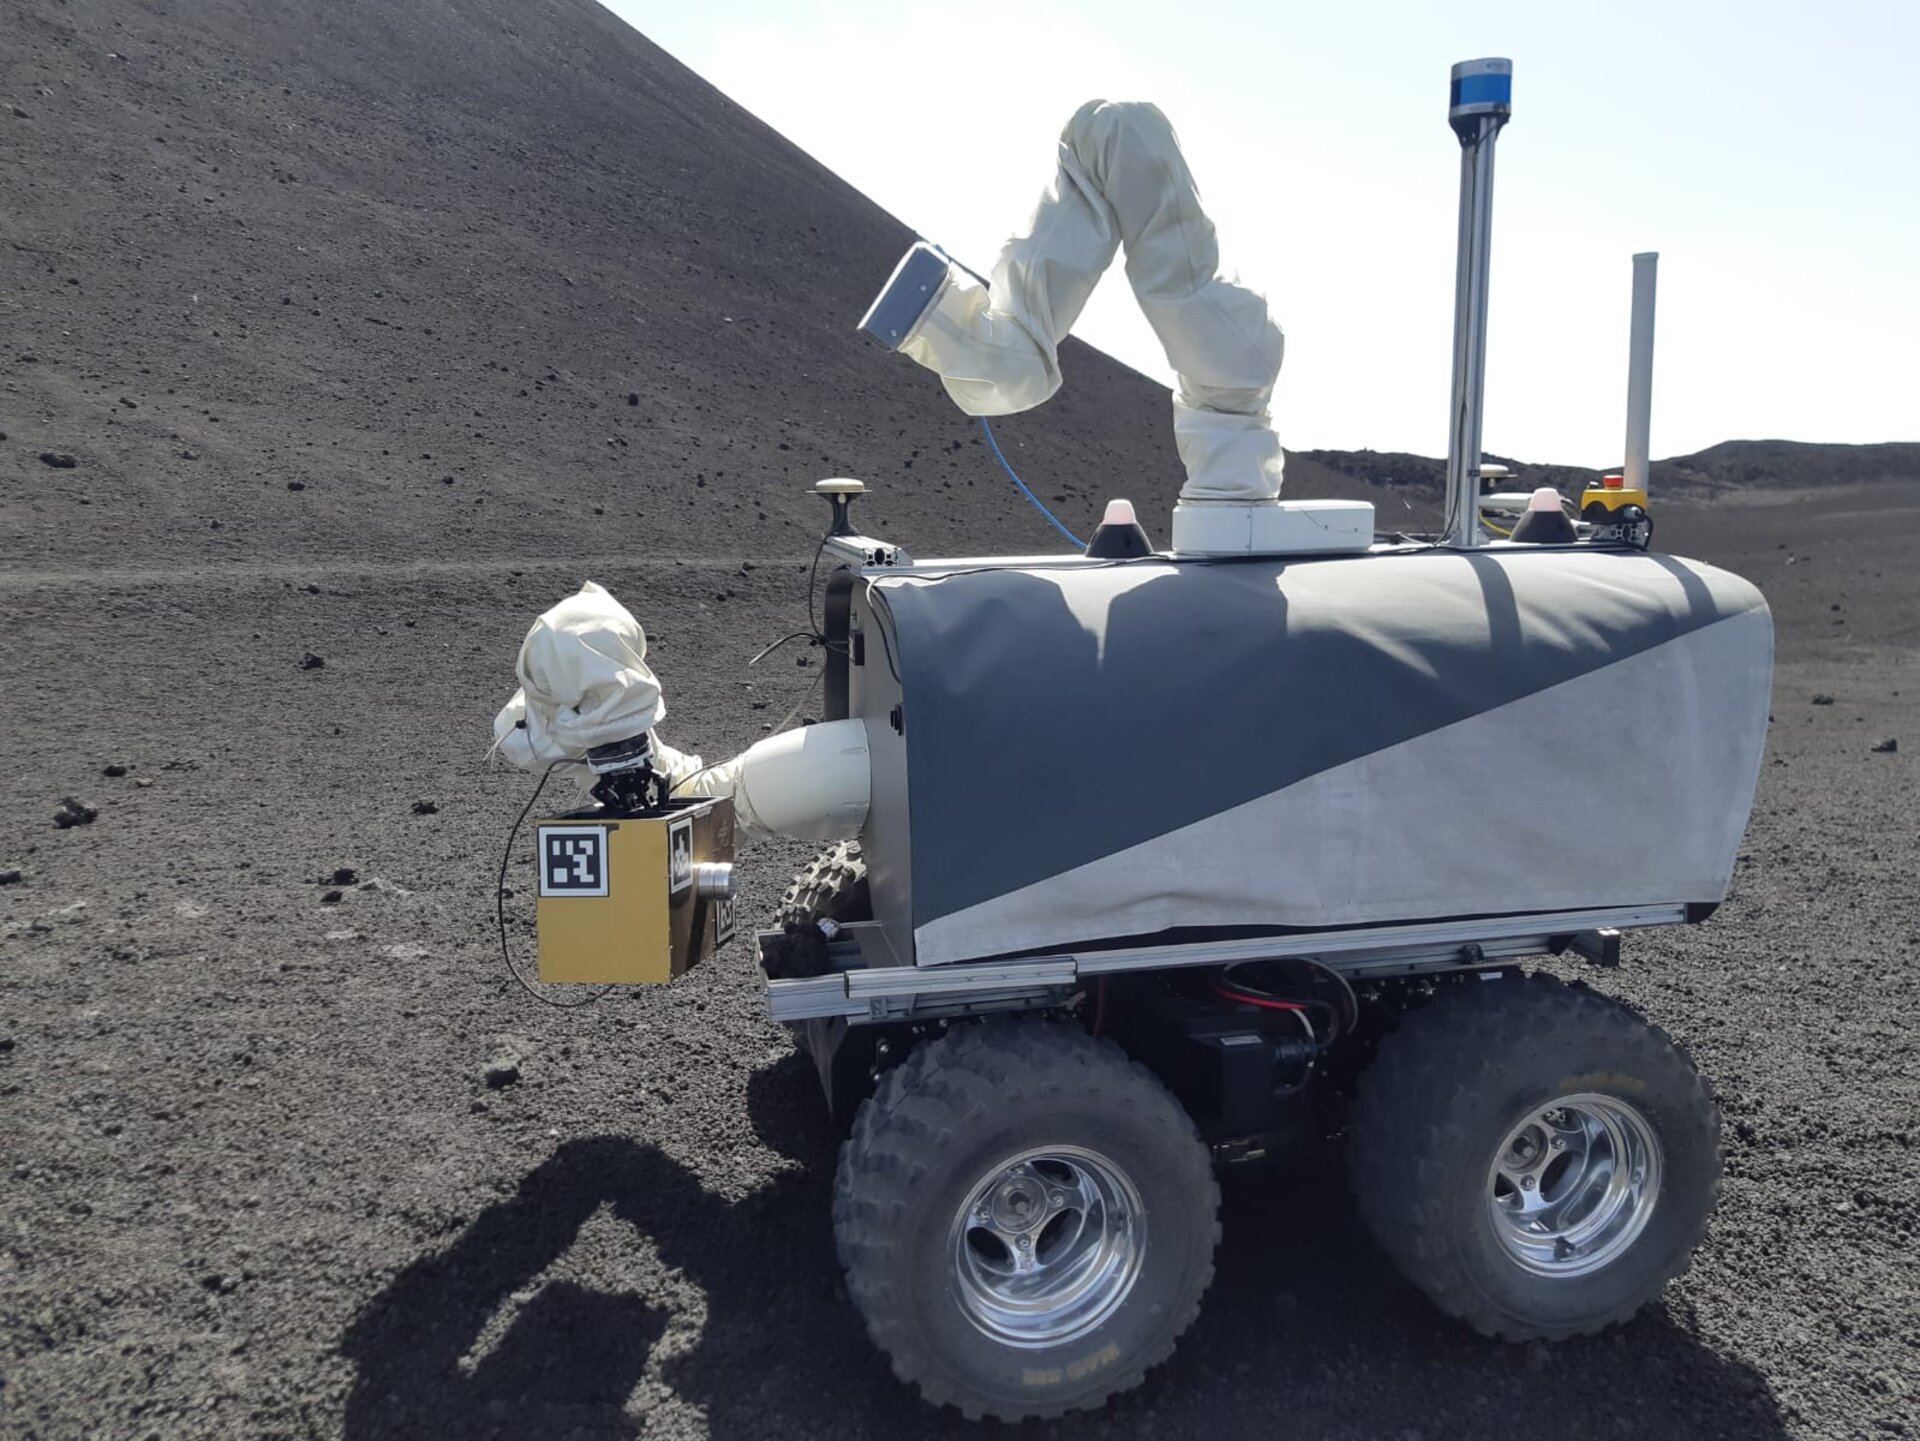 ESA's interact rover on Mount Etna, Italy